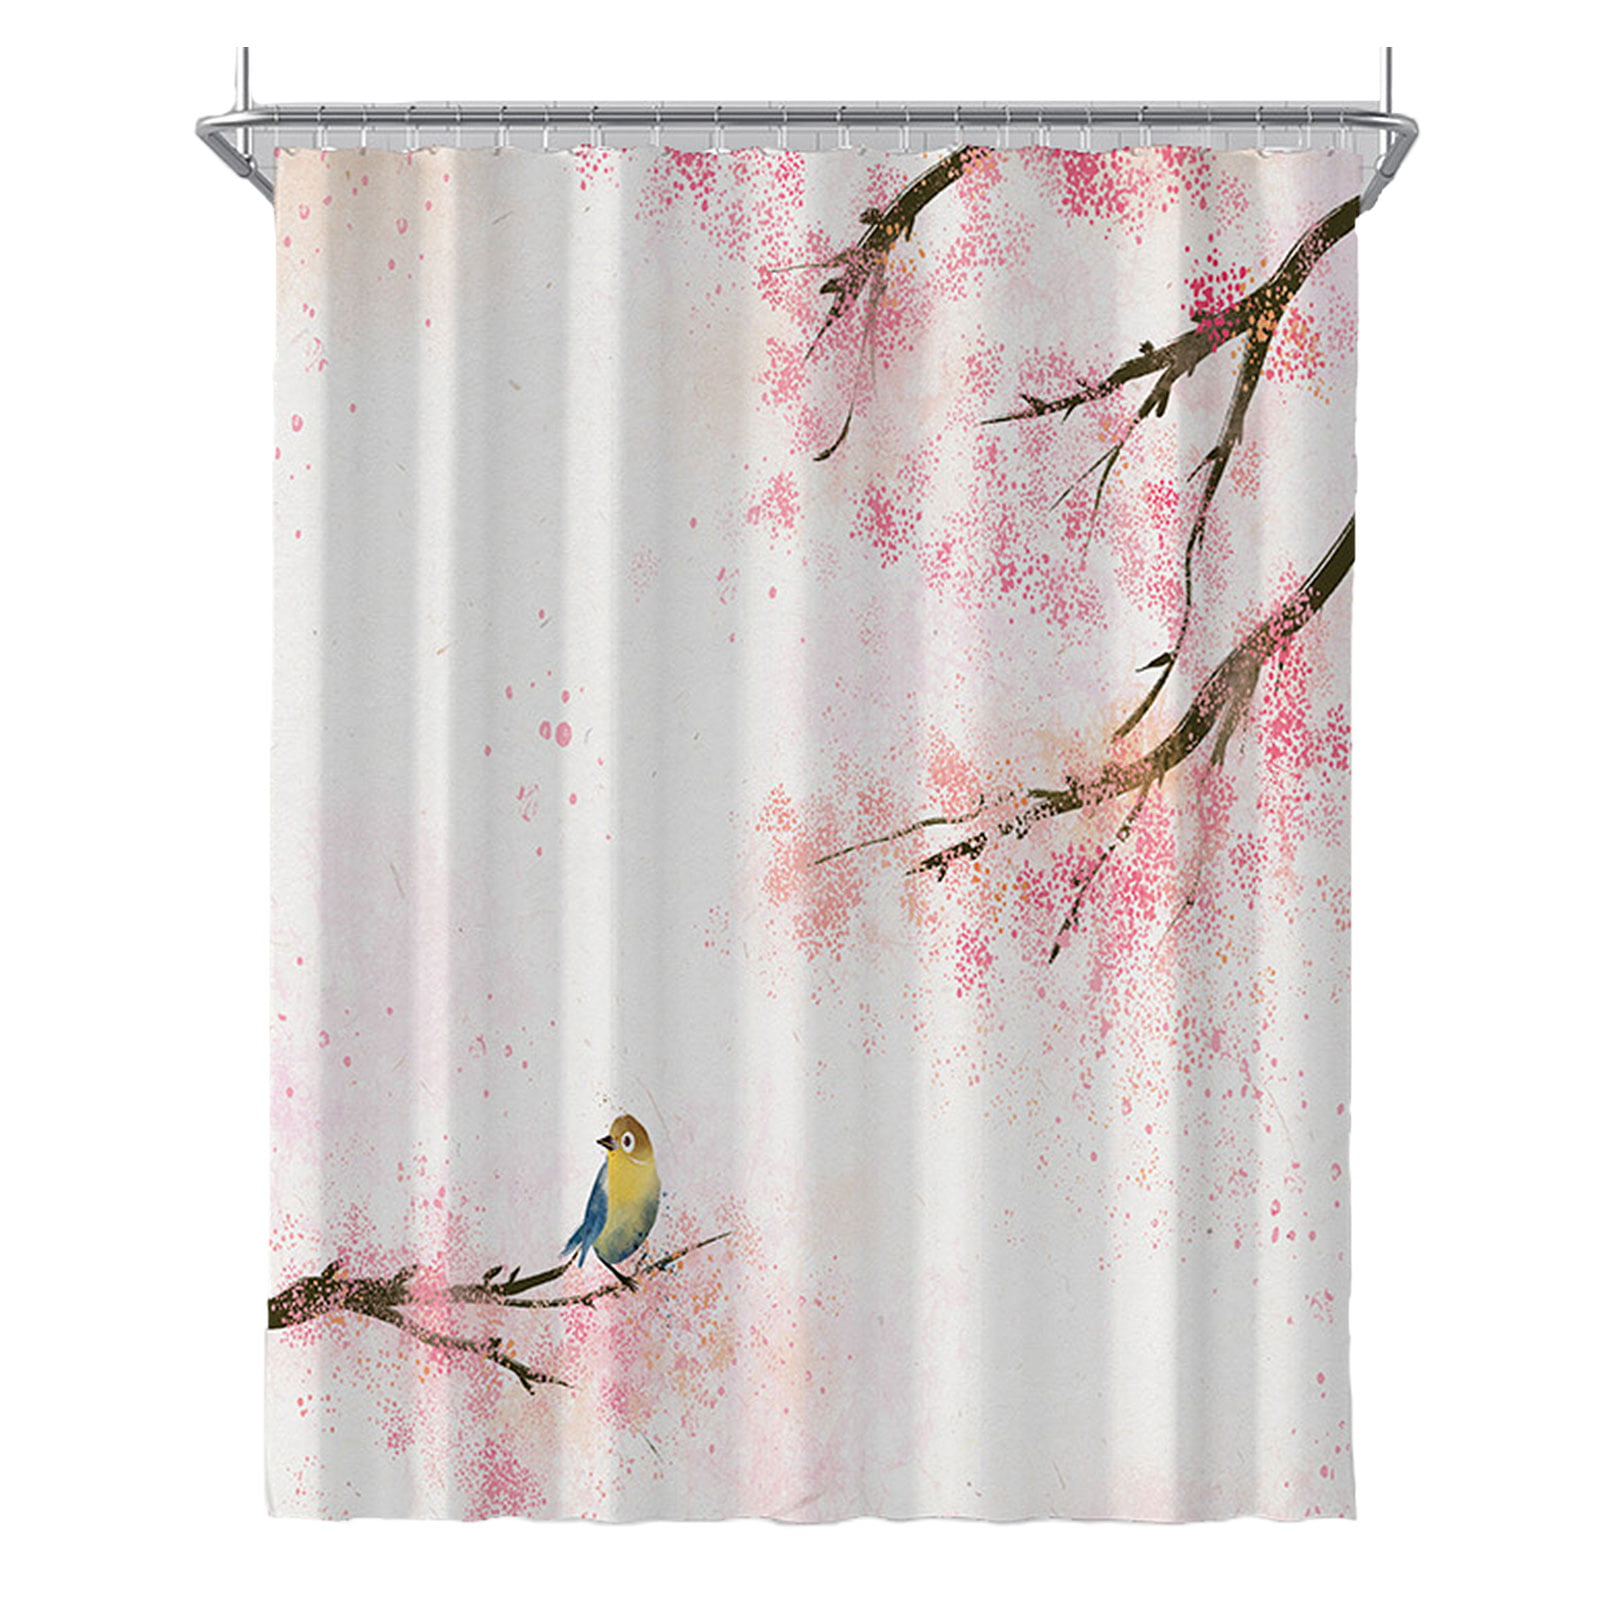 Wolf Animal Design Shower Curtain Bedroom Waterproof Fabric & 12hook 71*71inch 